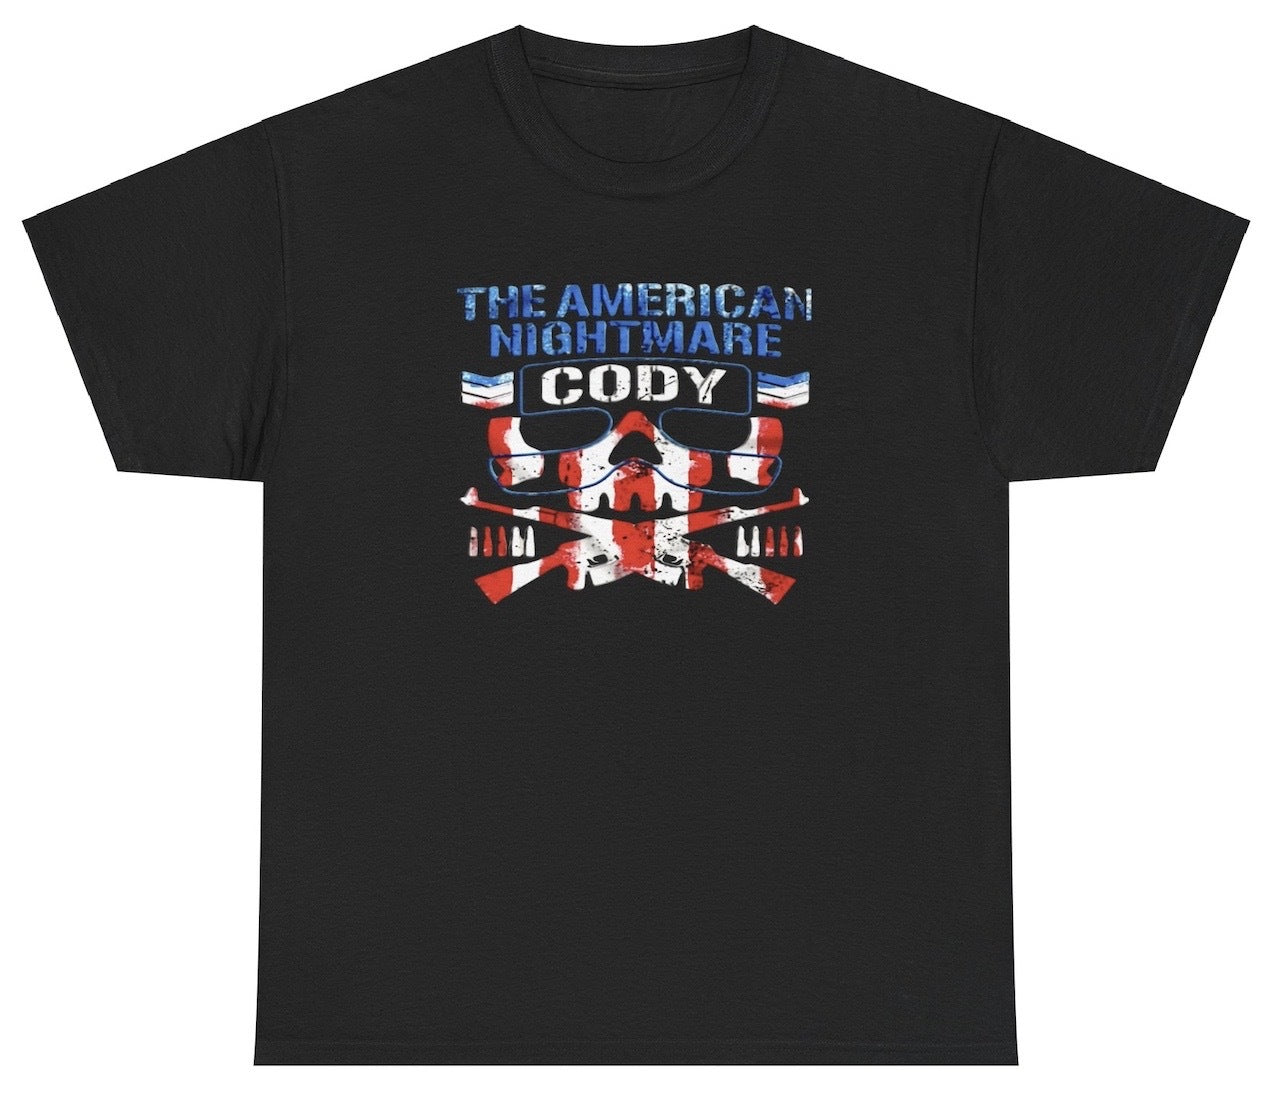 AAA Cody Rhoades T Shirt The American Nightmare WWE Wrestlemania Smackdown Merch Tee